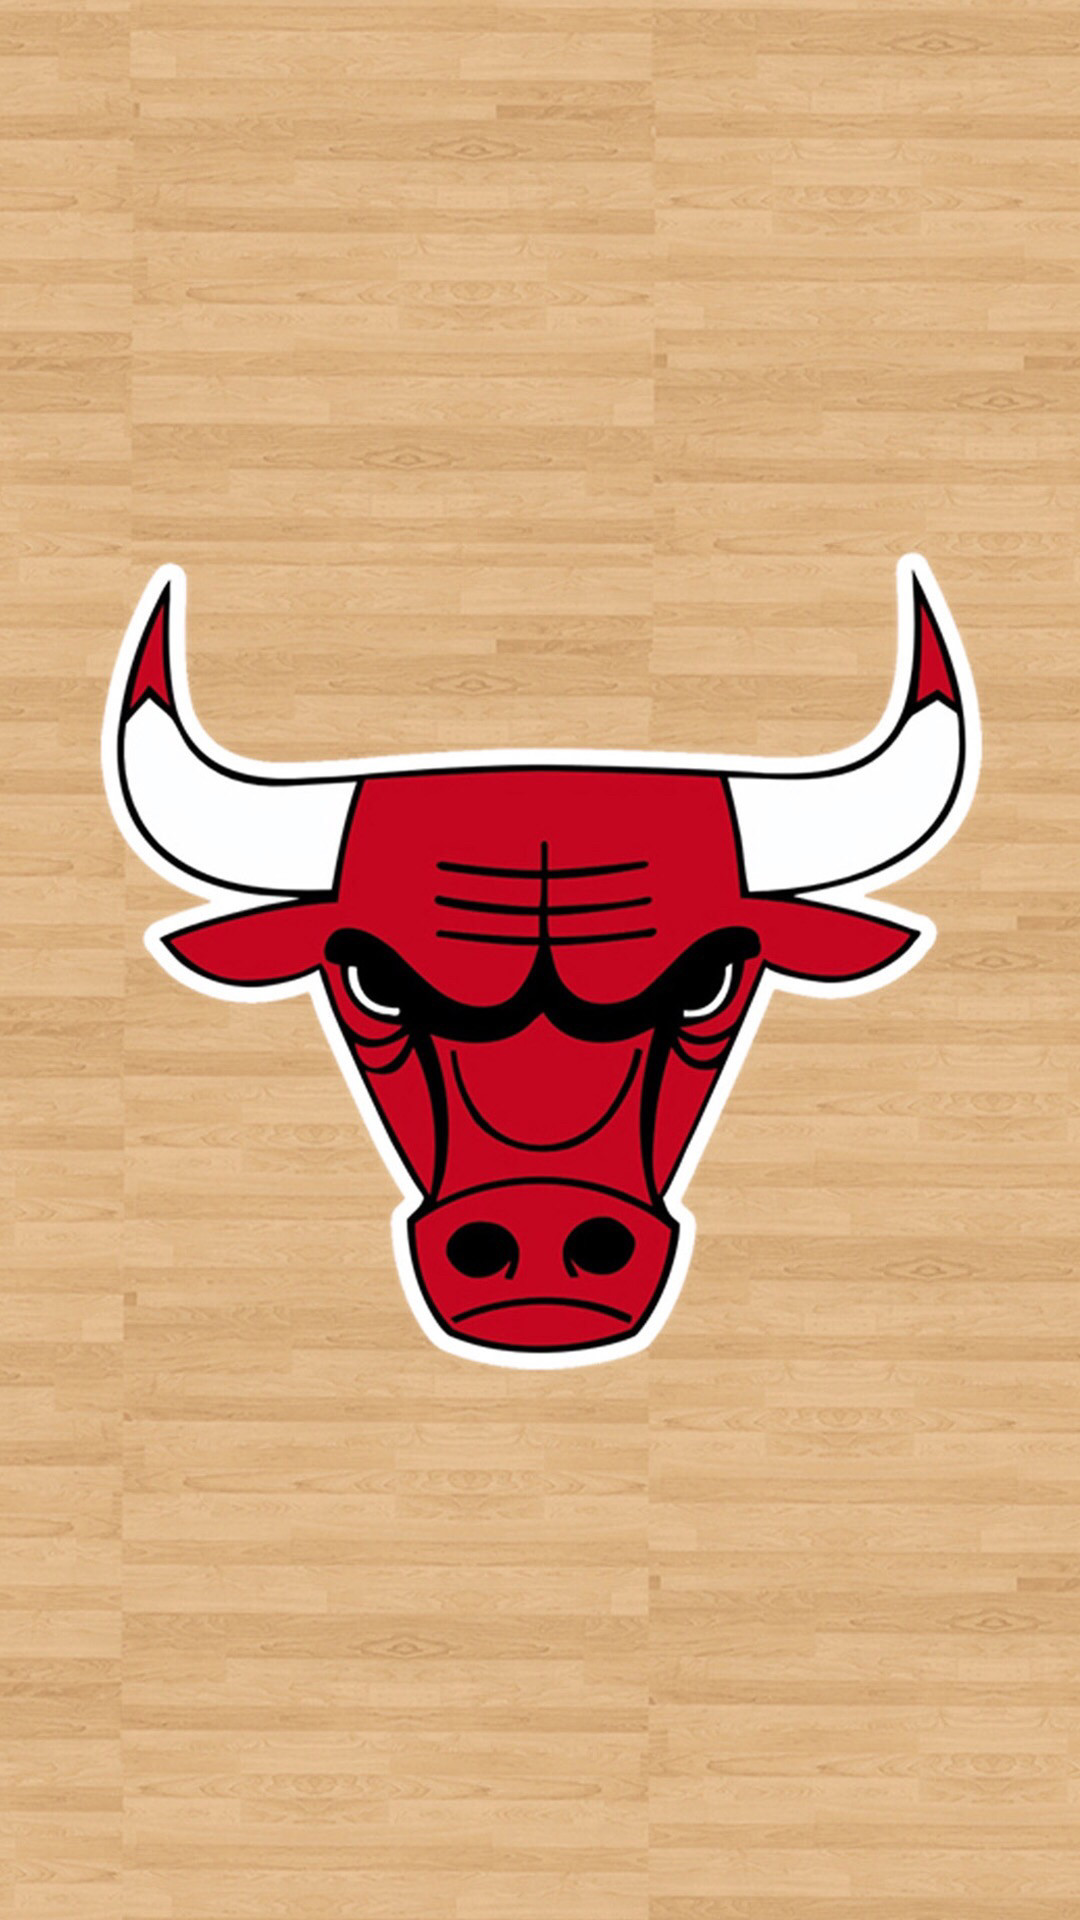 Chicago Bulls rumors